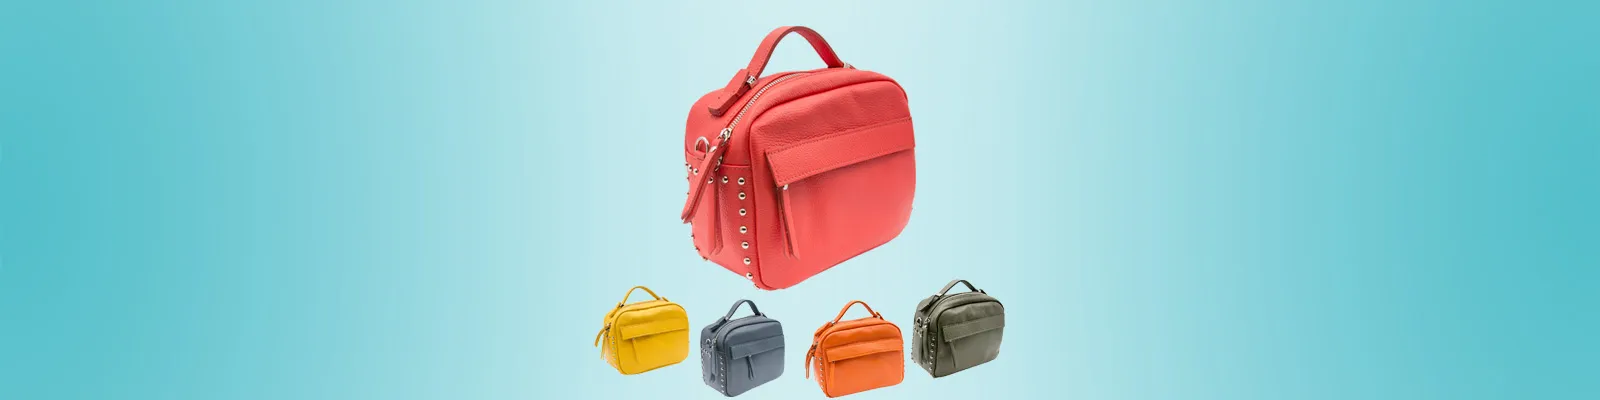 Bags Category Image | Buckle.de - Your Belt Buckle Store